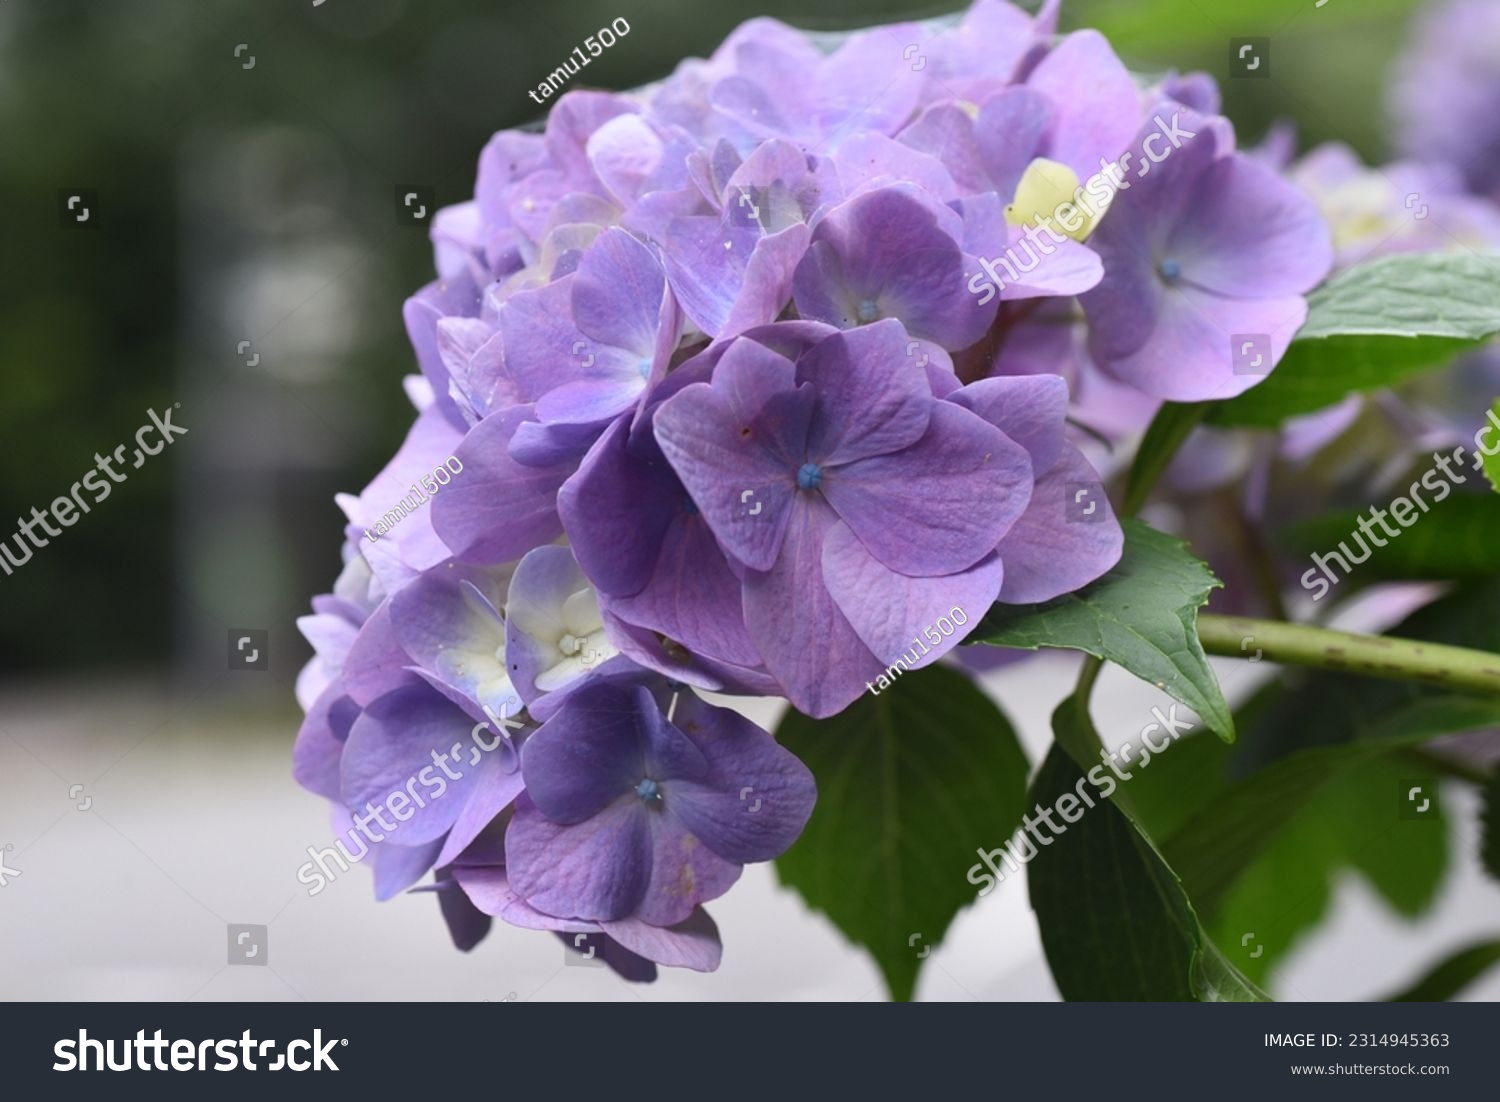 Hydrangea flowers. Seasonal background material. Hydrangea flowers are a seasonal tradition in Japan during the rainy season. #2314945363